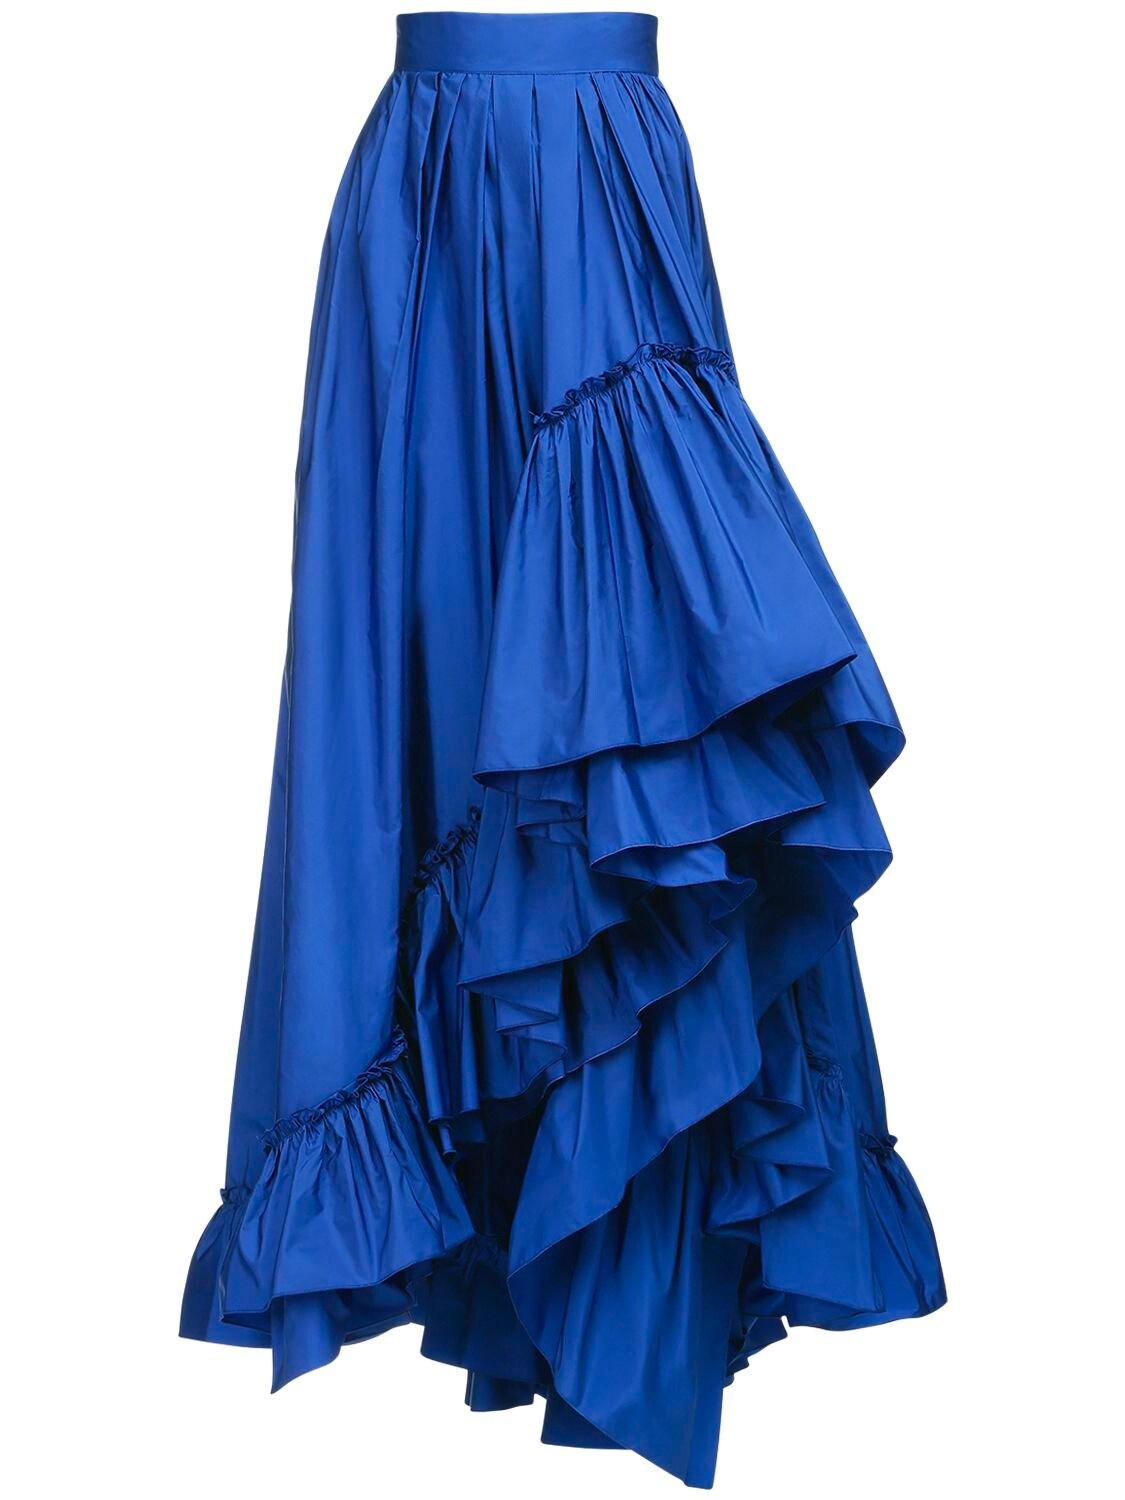 Max Mara Asymmetric Ruffled Taffeta Skirt in Blue | Lyst